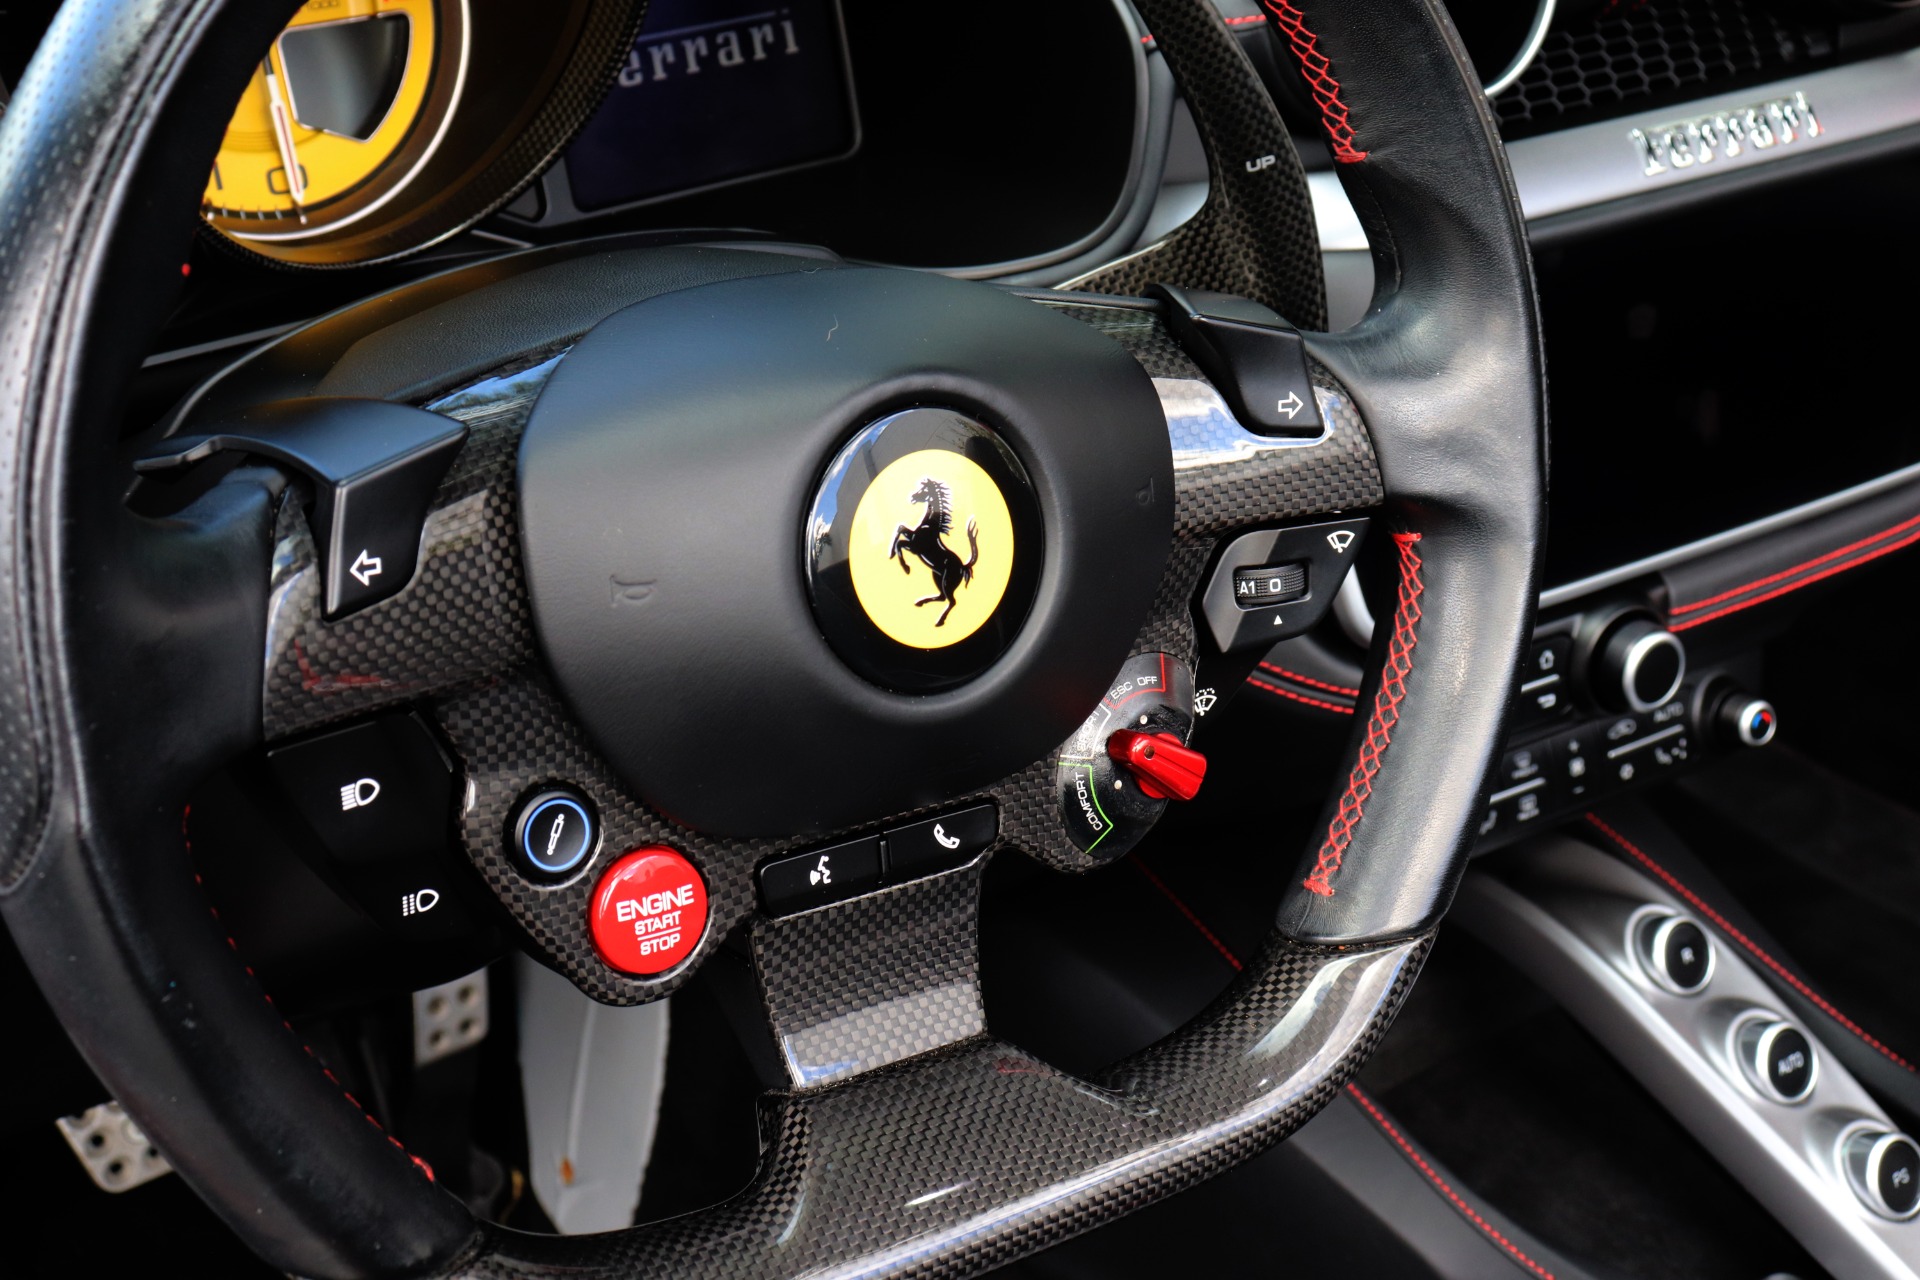 Used 2019 Ferrari Portofino For Sale ($185,900) | Marino Performance ...